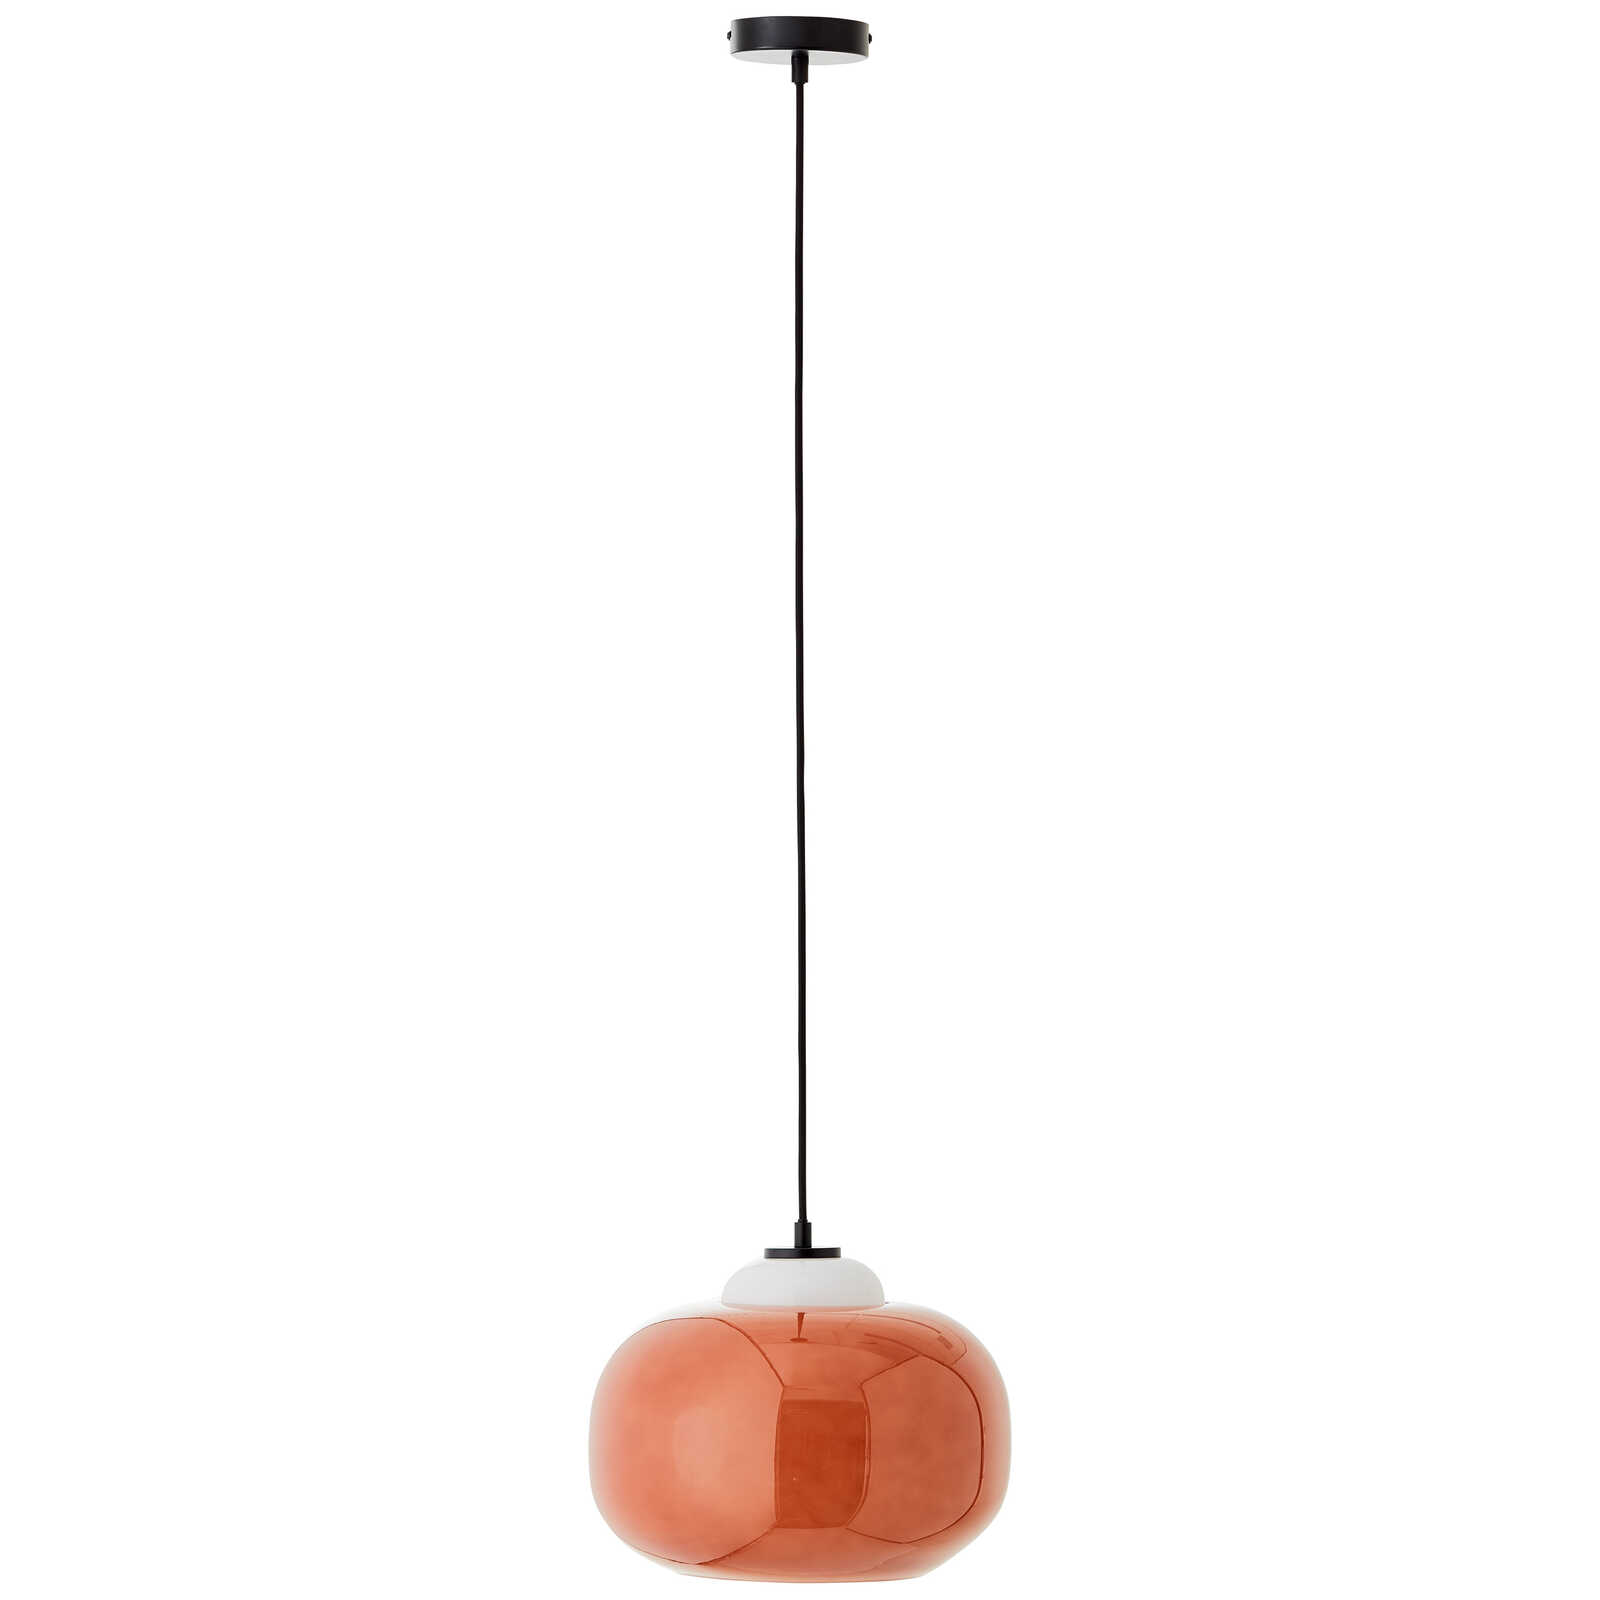             Lámpara colgante de cristal - Carla 2 - Naranja
        